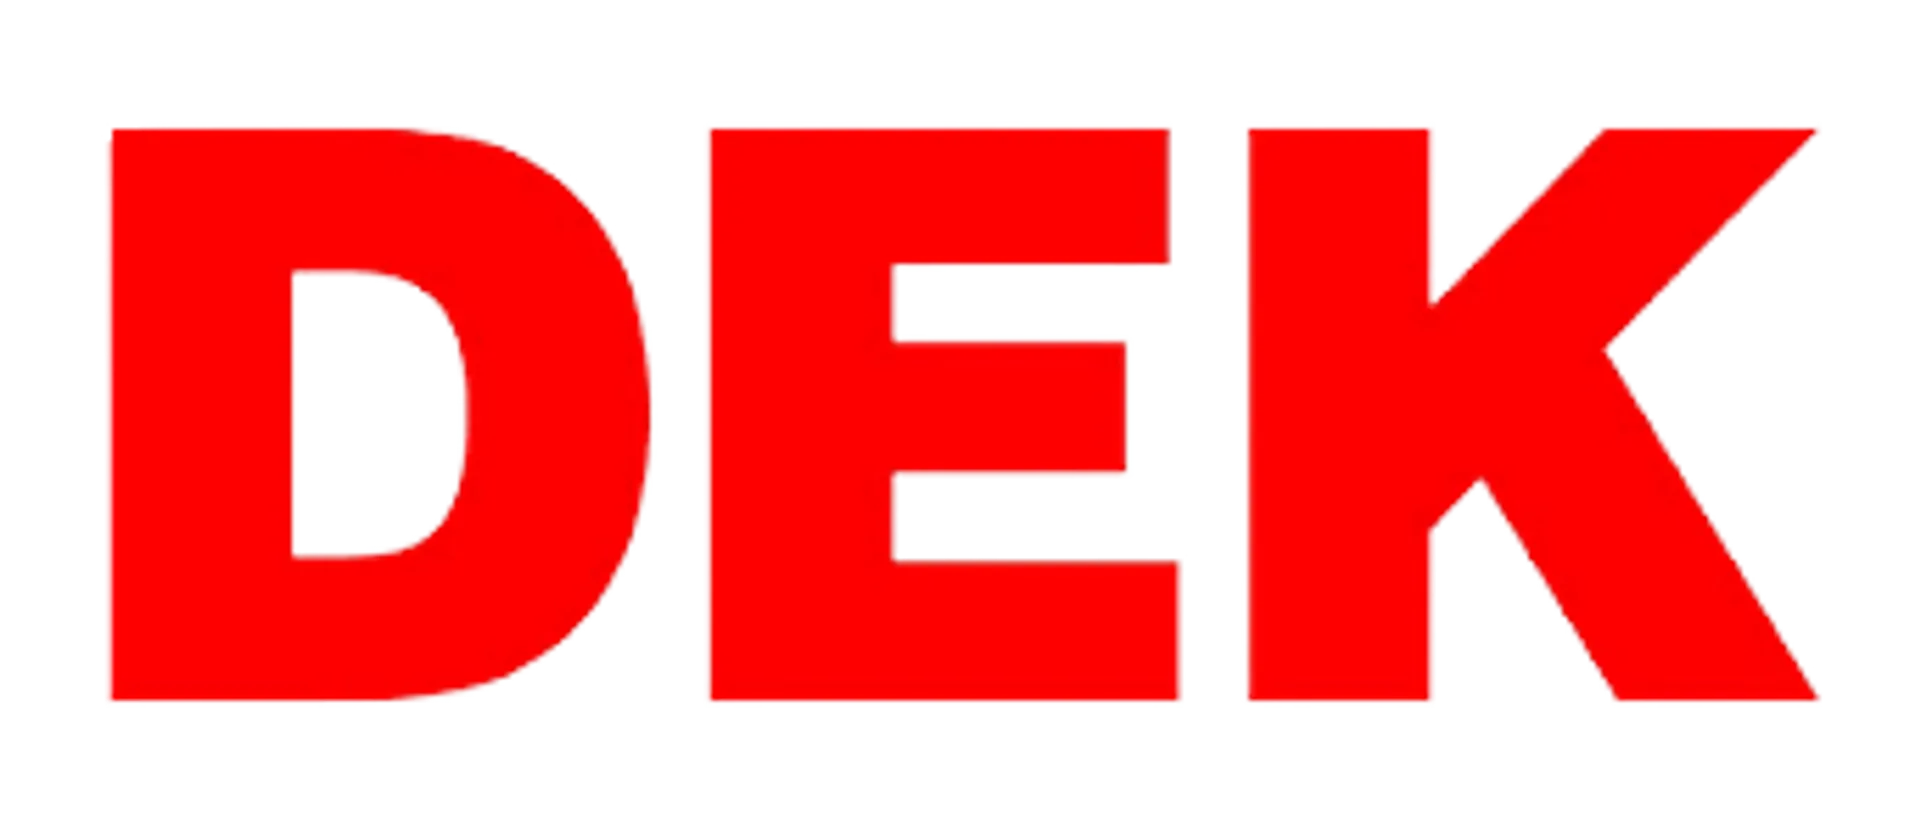 DEK logo of current catalogue